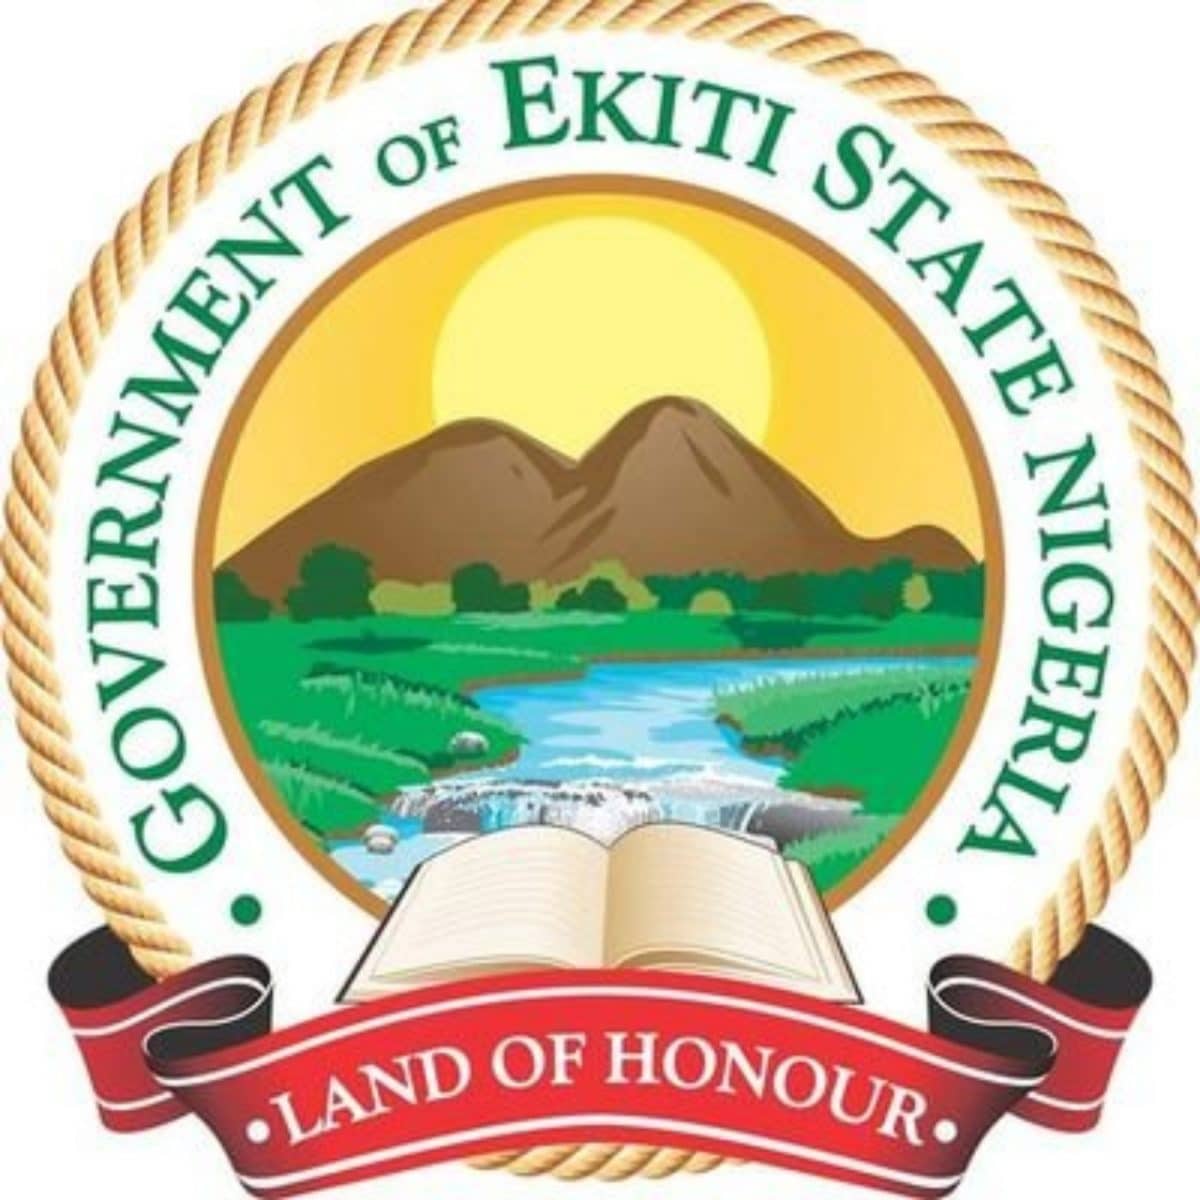 Nigeria news : Ekiti govt warns two communities against conducting economic activities on disputed land